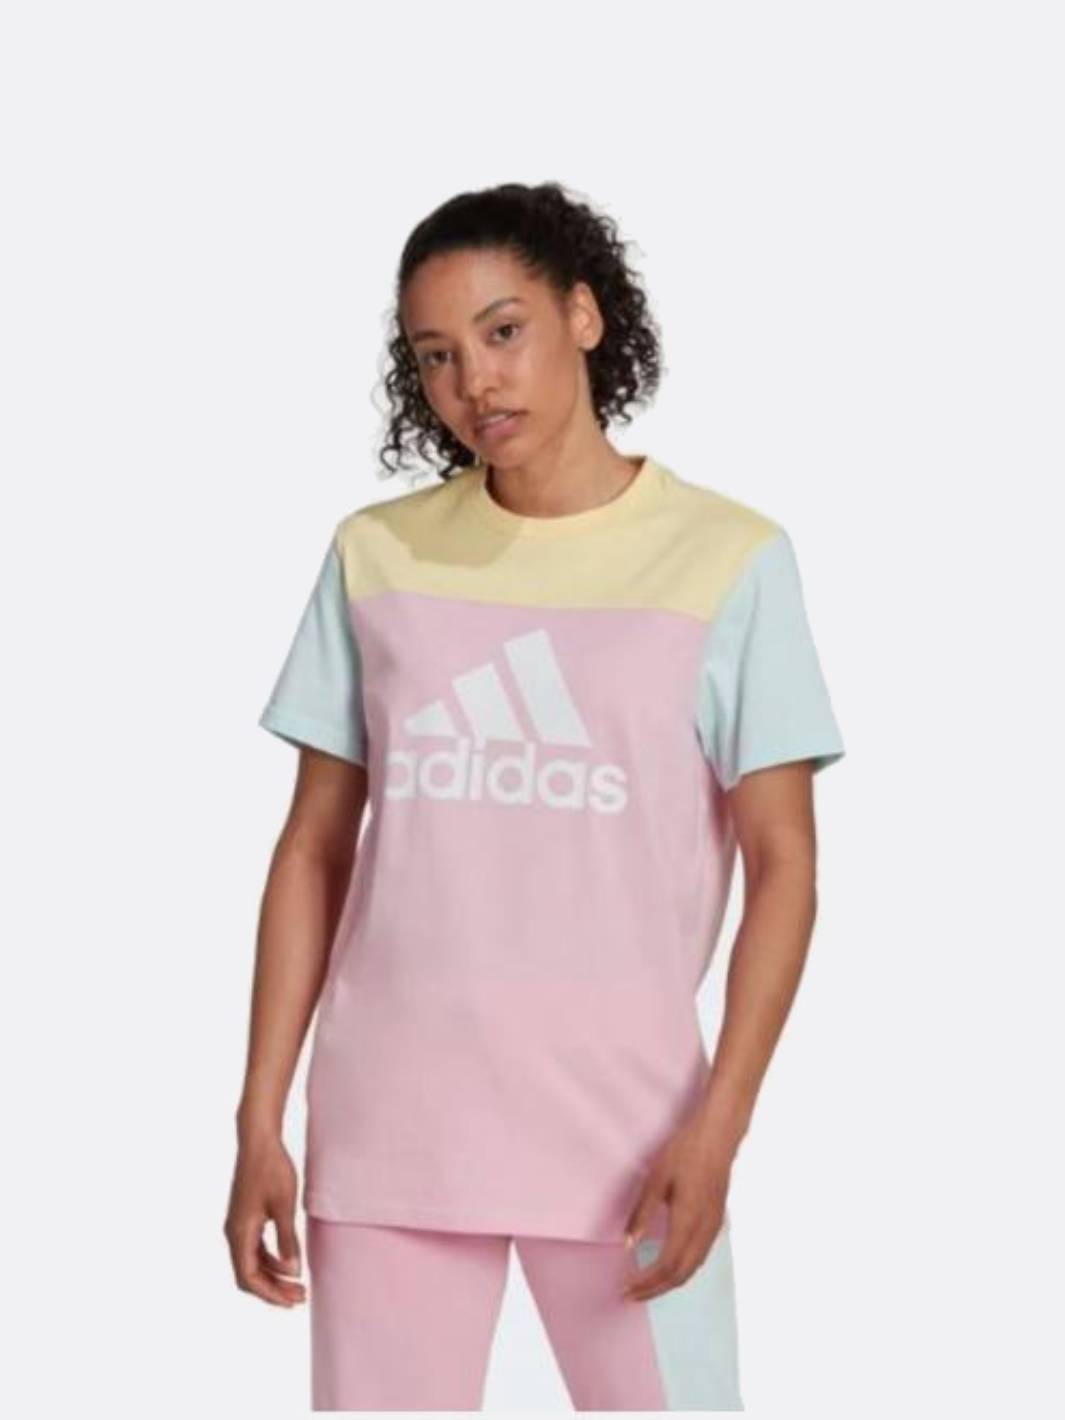 adidas - Women - Essentials Color Block Logo Tee - Pink/Blue/Yellow